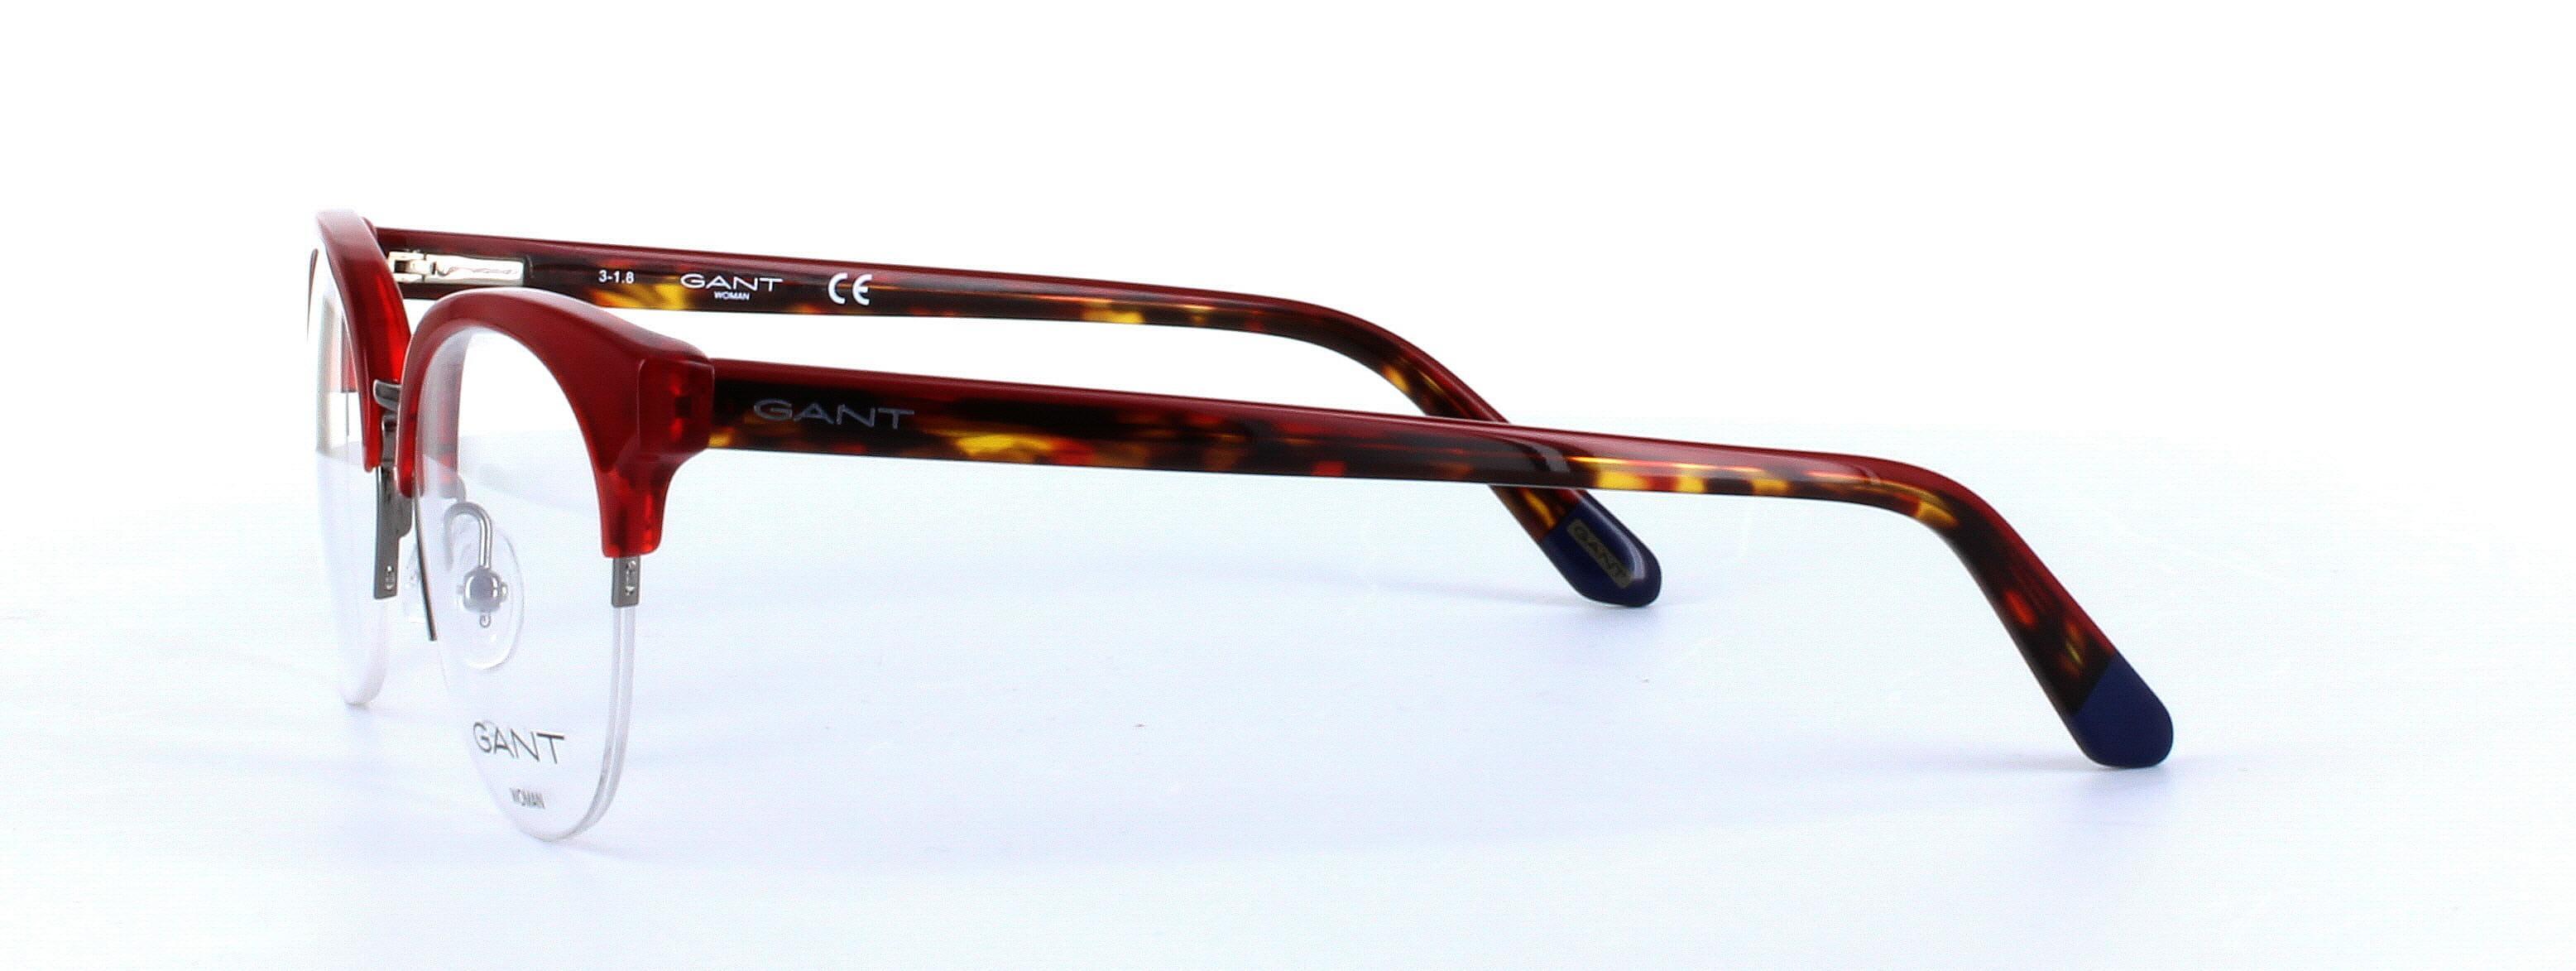 GANT (4085-066) Red Semi Rimless Round Acetate Glasses - Image View 2